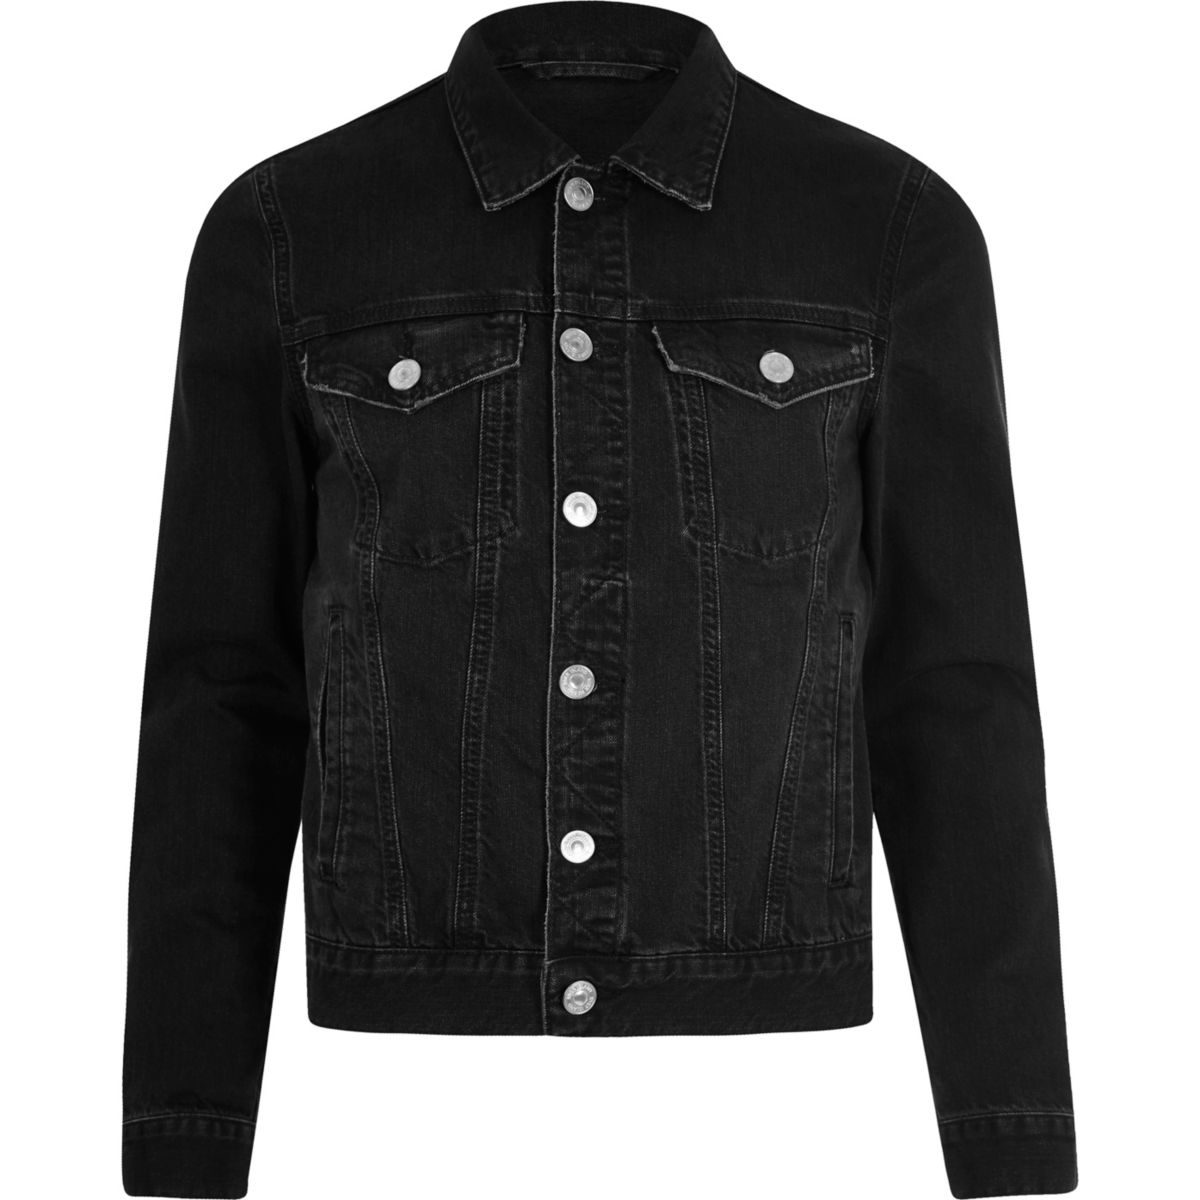 Black distressed denim jacket - Coats & Jackets - Sale - men